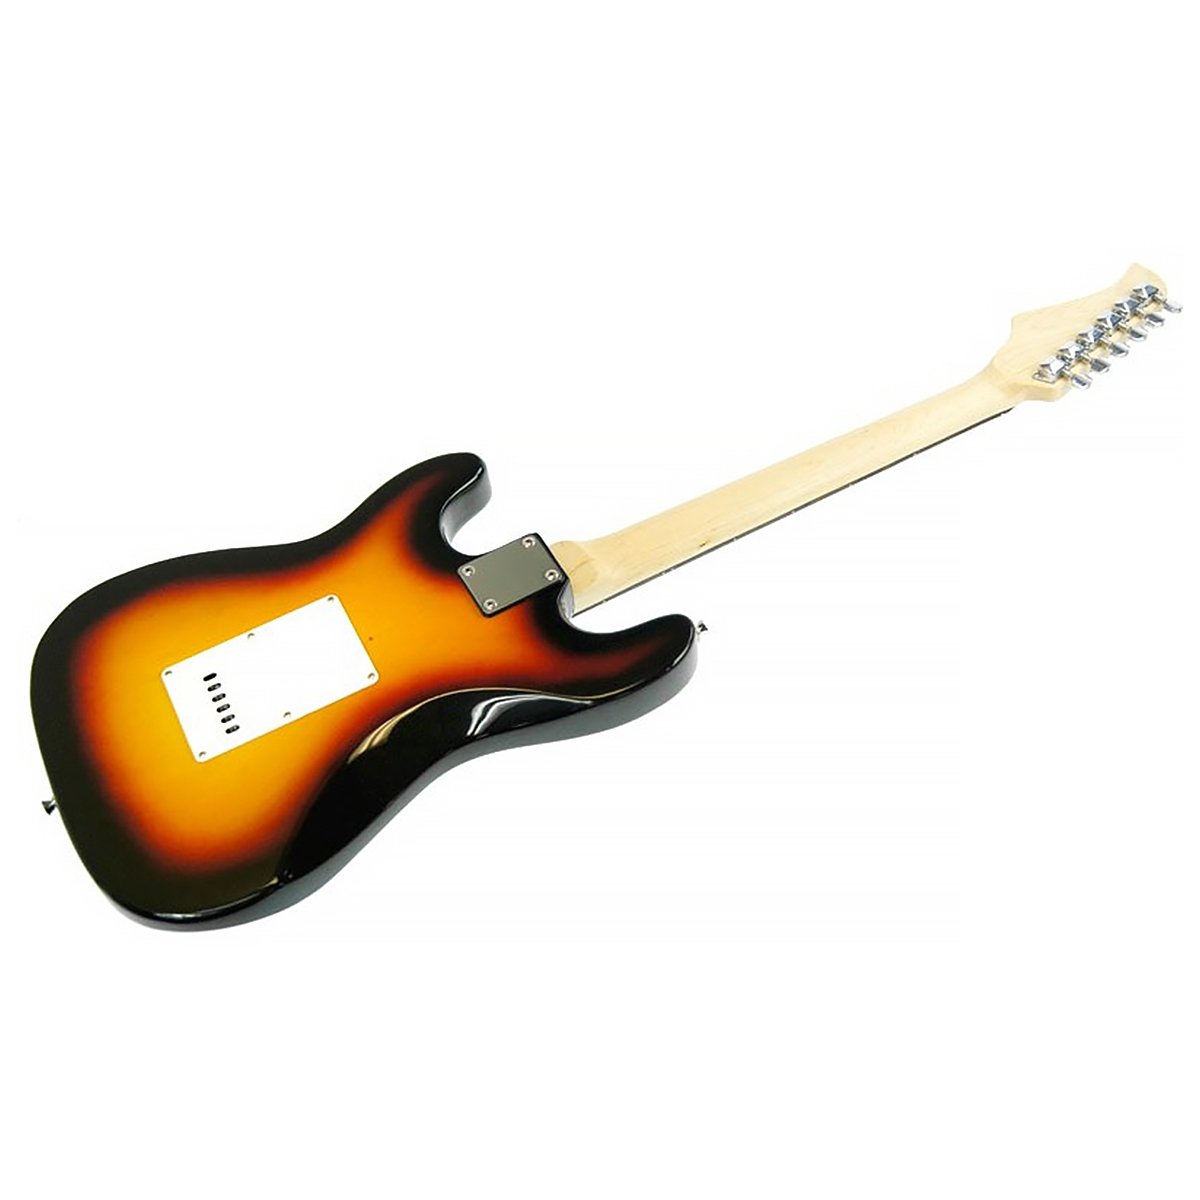 39in Gloss Finish Electric Guitar w/ Whammy Bar - Karrera